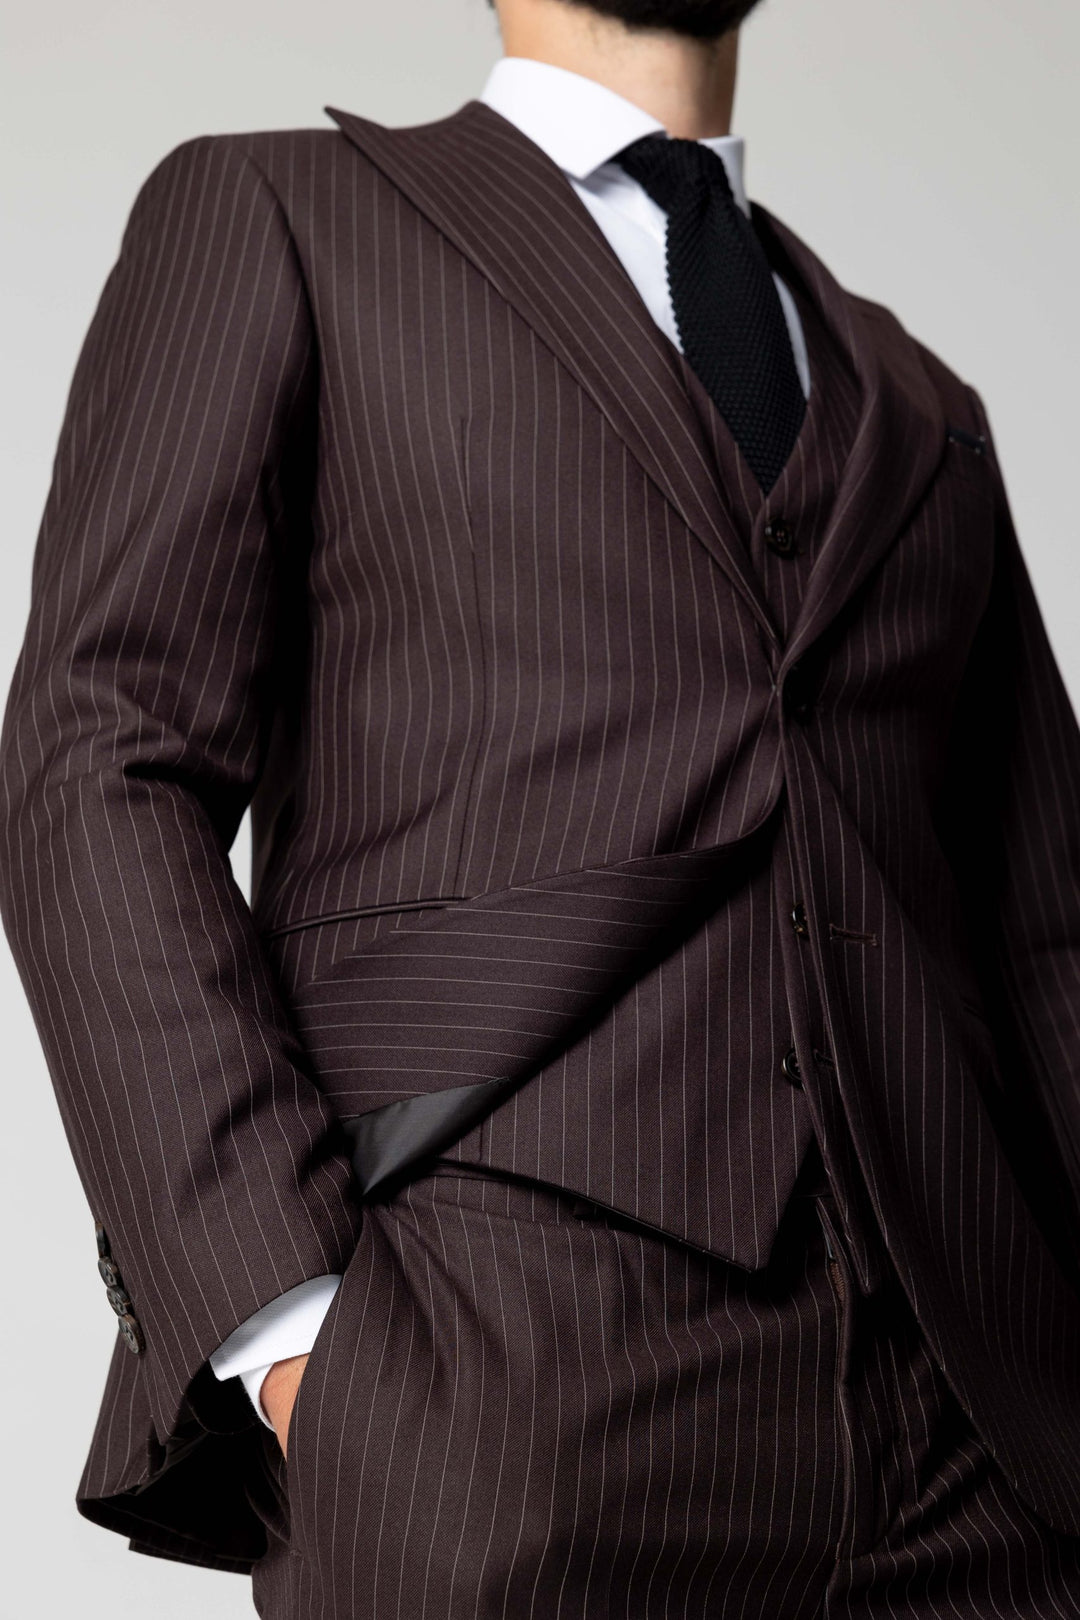 Three-piece suit in dark brown with stripes